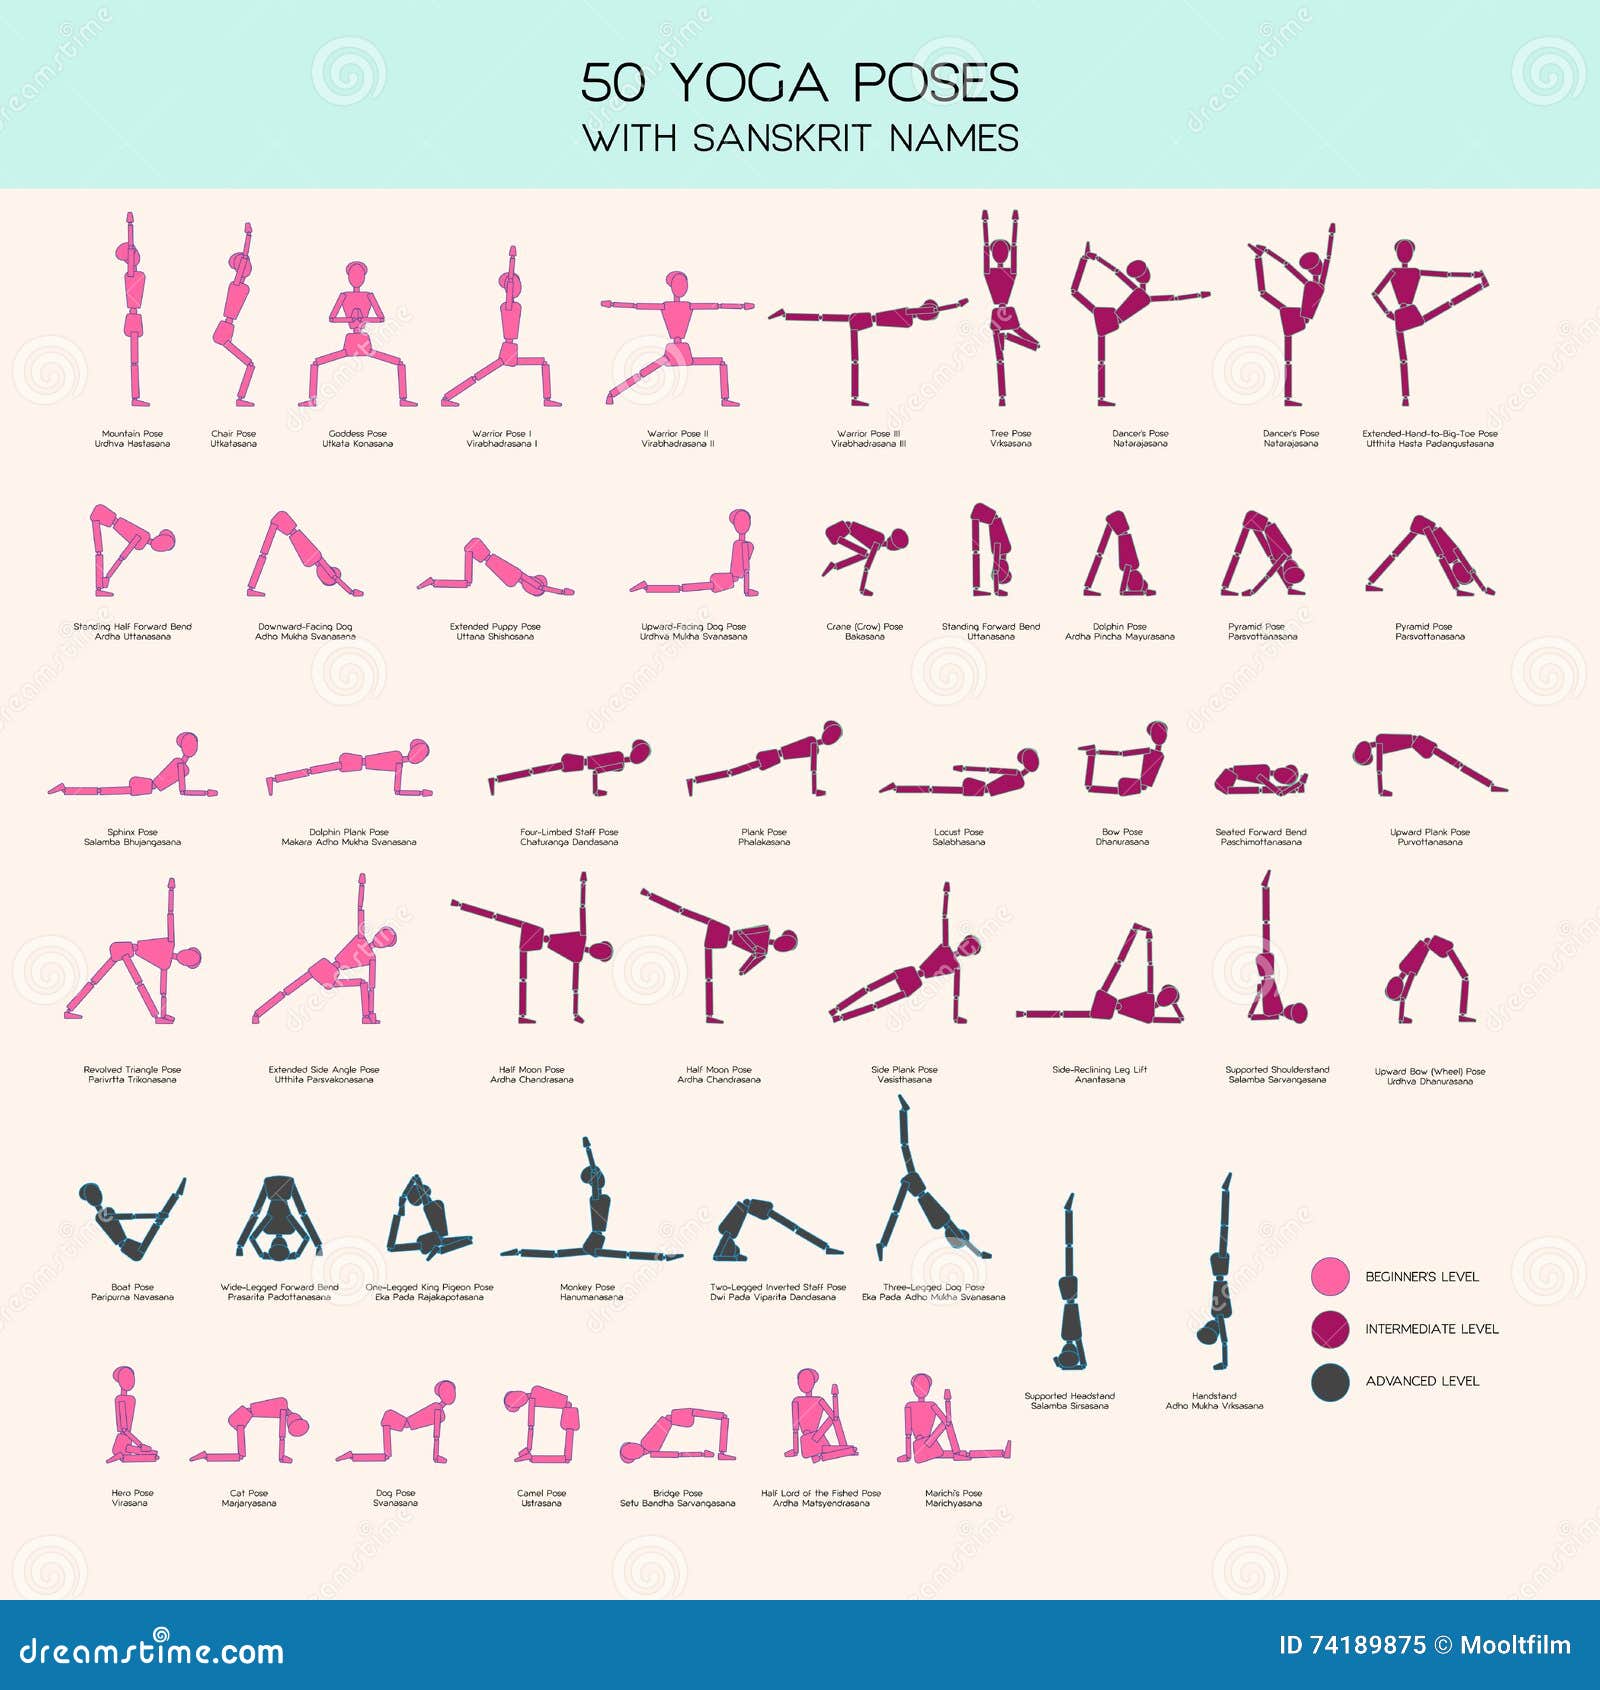 Sample yoga postures | Download Scientific Diagram